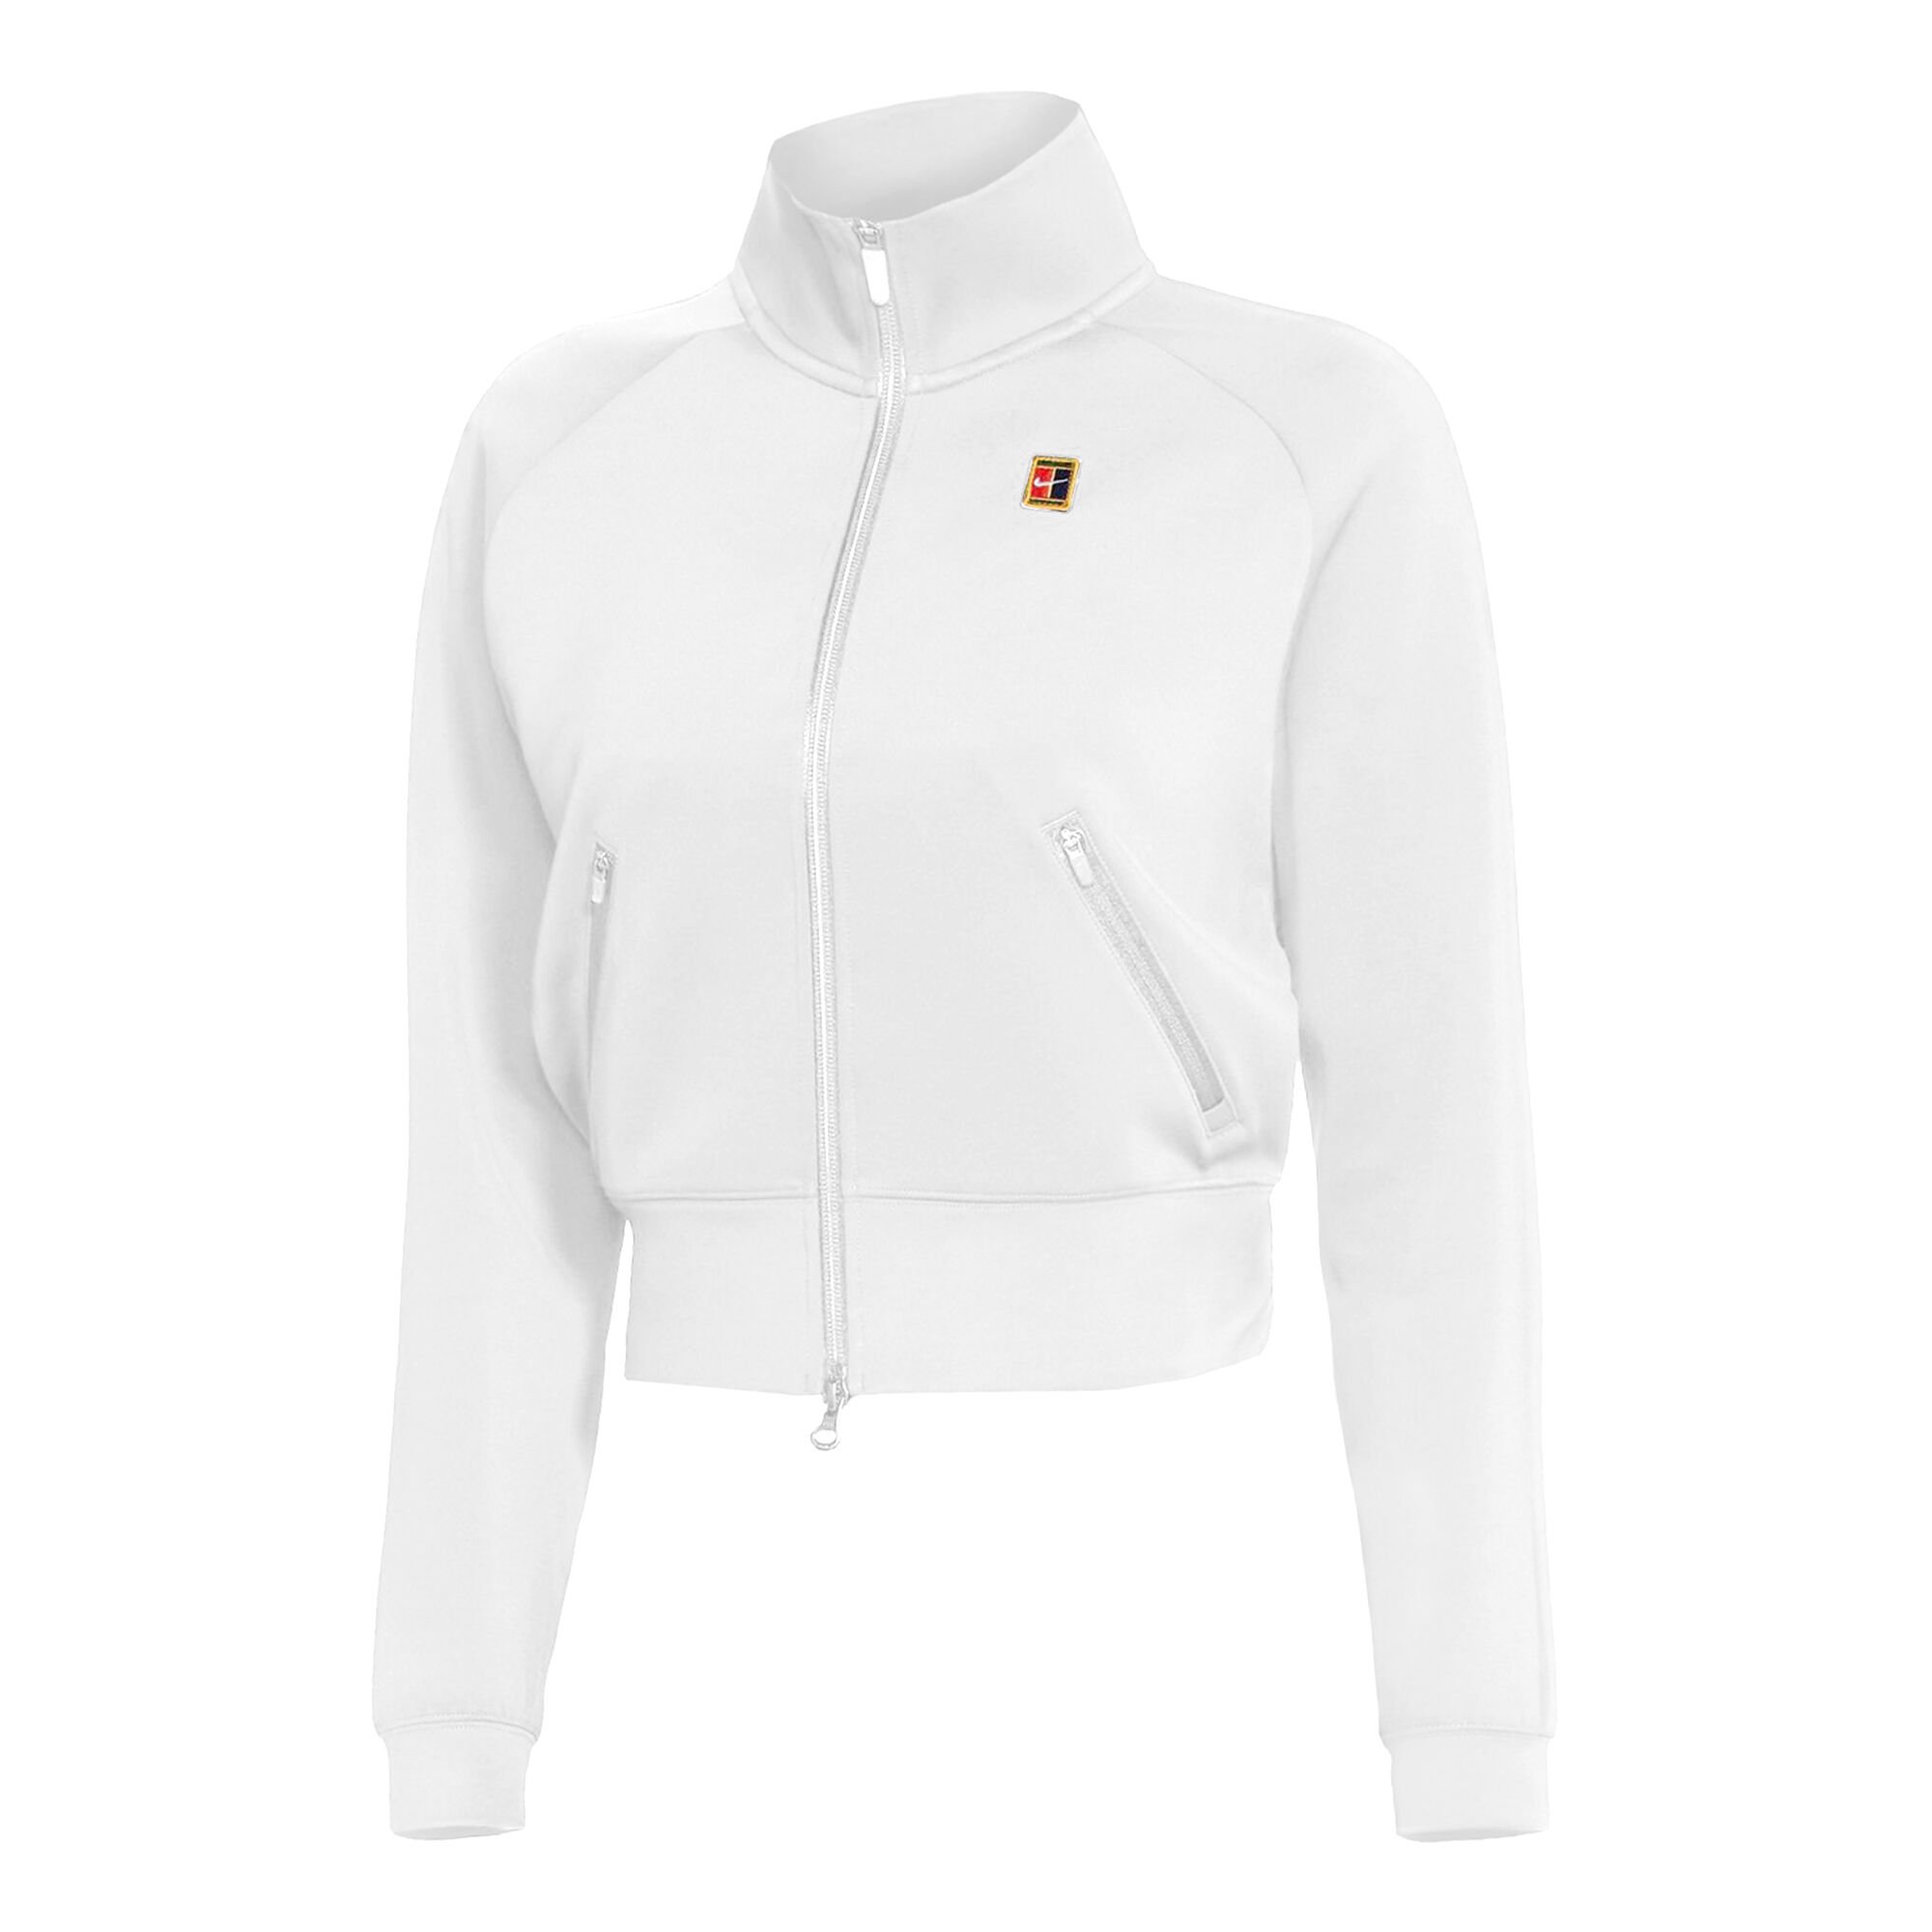 Buy Nike Court Heritage Training Jacket Women White online | Tennis Point  COM